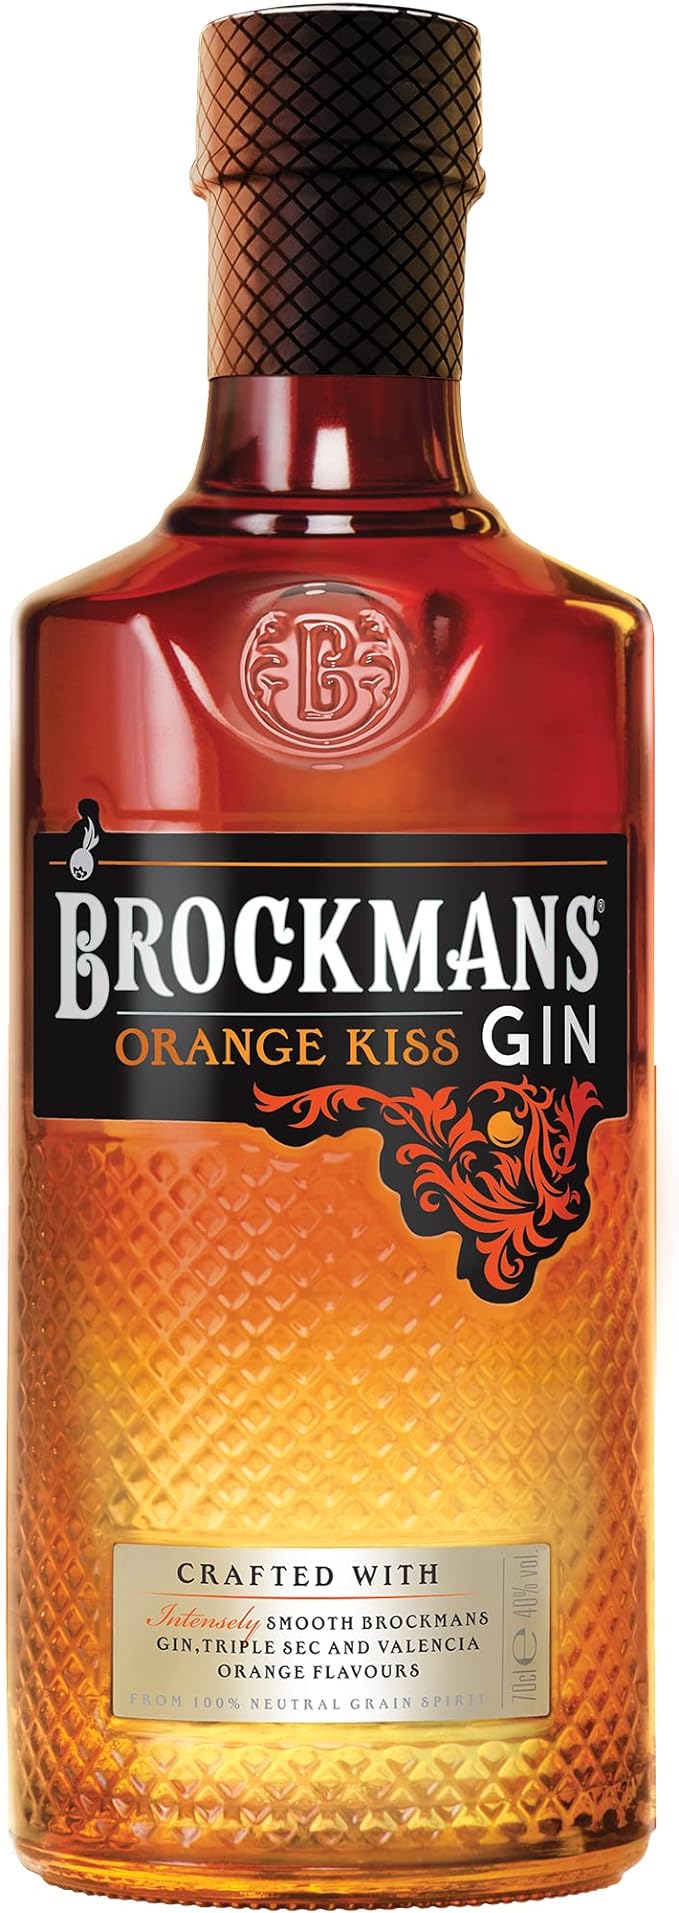 BROCKMANS ORANGE KISS GIN 40% 70CL